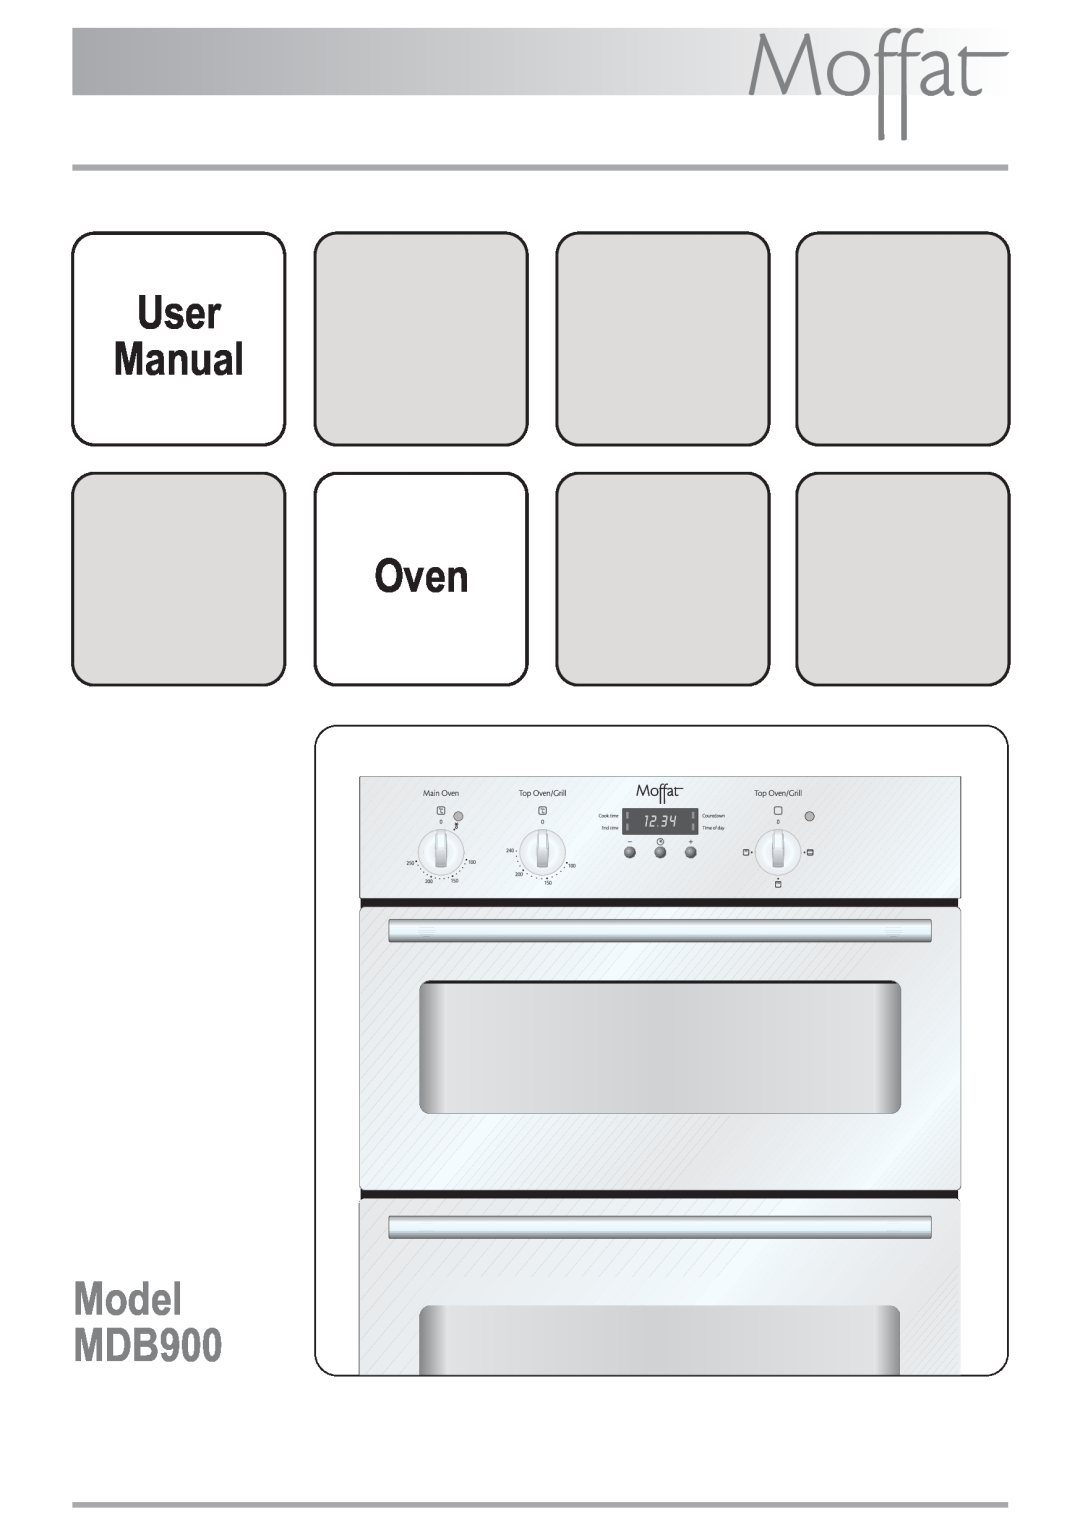 Moffat MDB900 user manual User, Model, Oven, Manual 